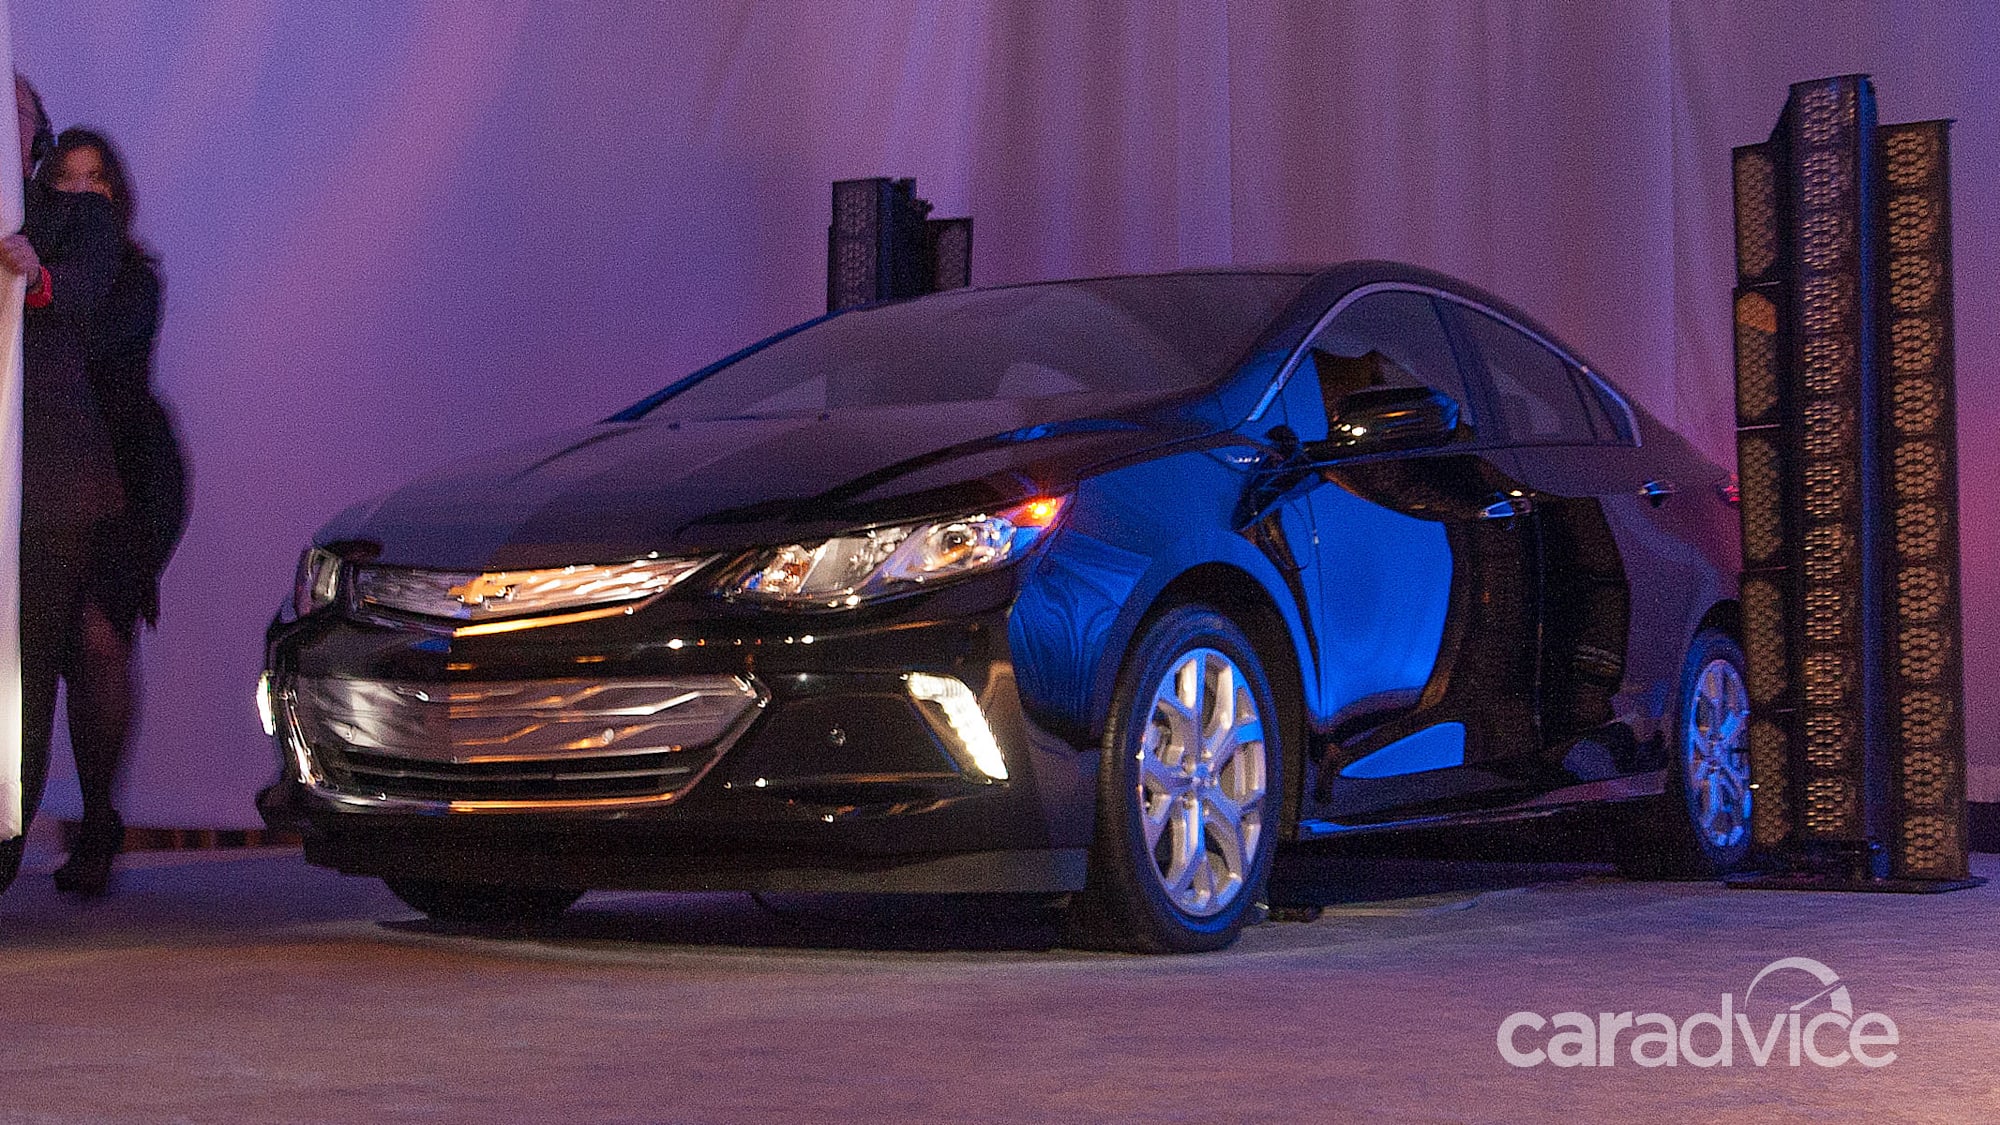 Chevrolet Volt Secondgeneration plugin hybrid revealed at CES